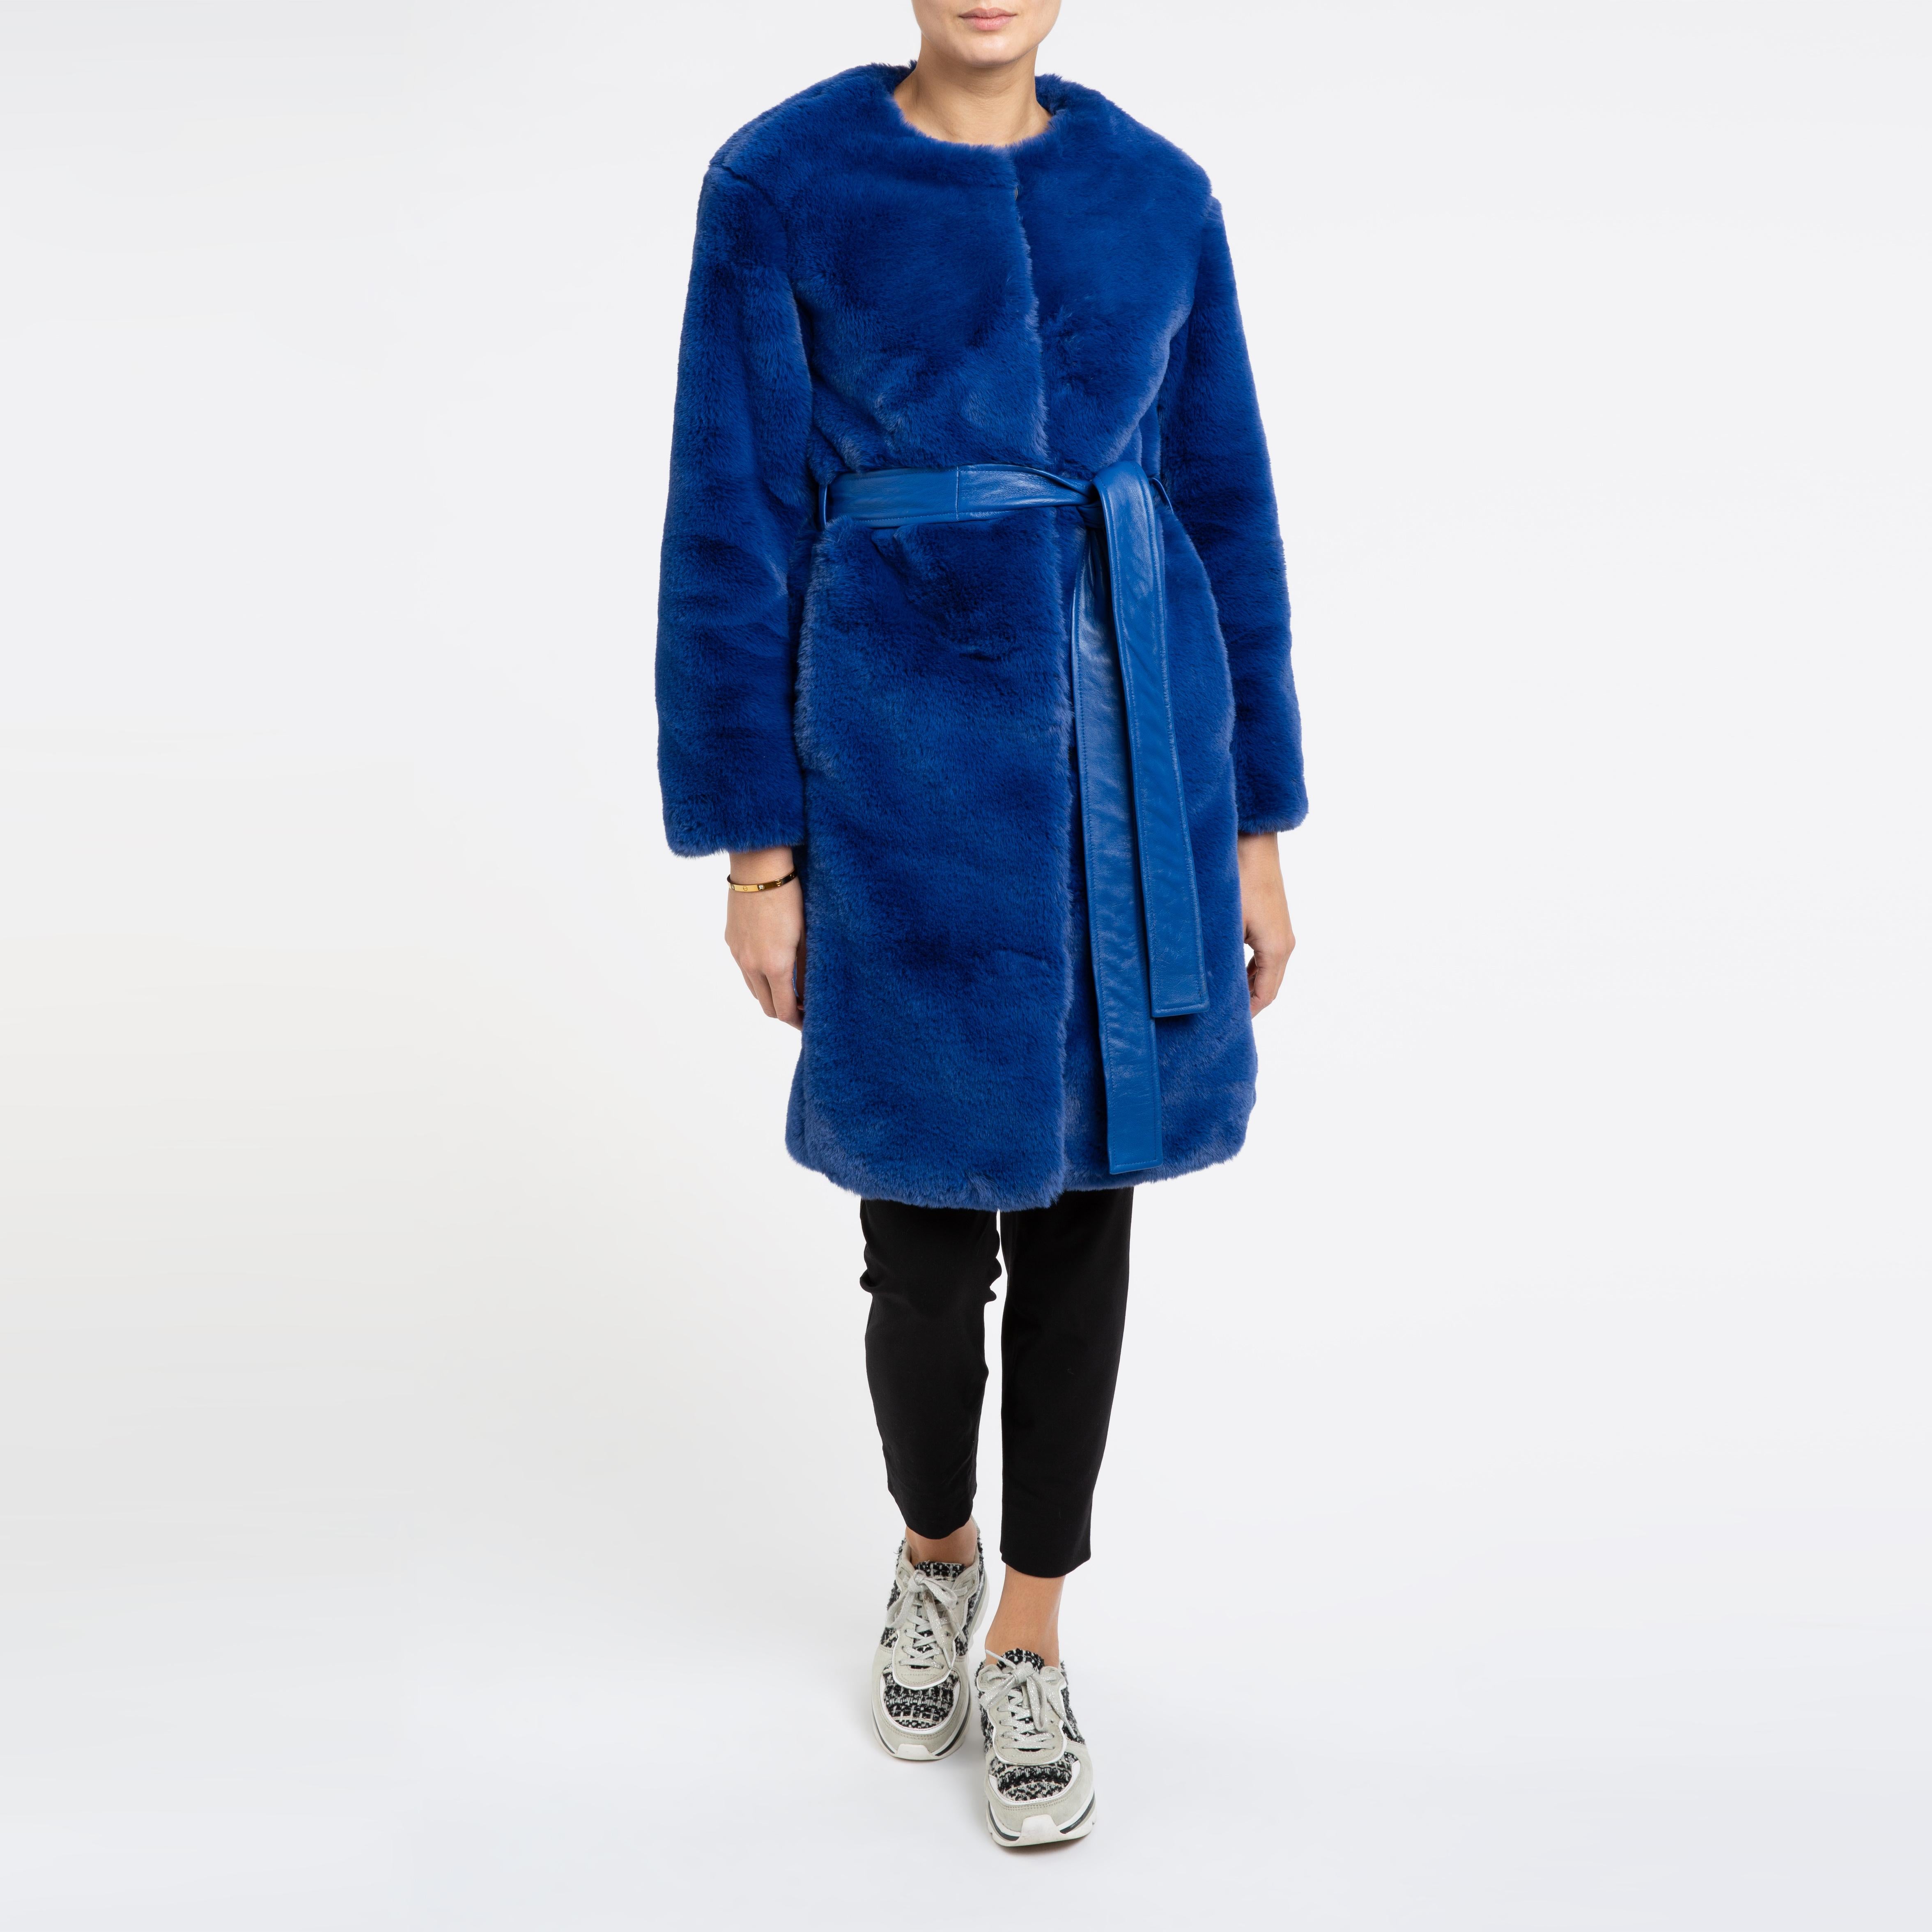 Verheyen London Serena  Collarless Faux Fur Coat in Blue - Size uk 8 For Sale 1